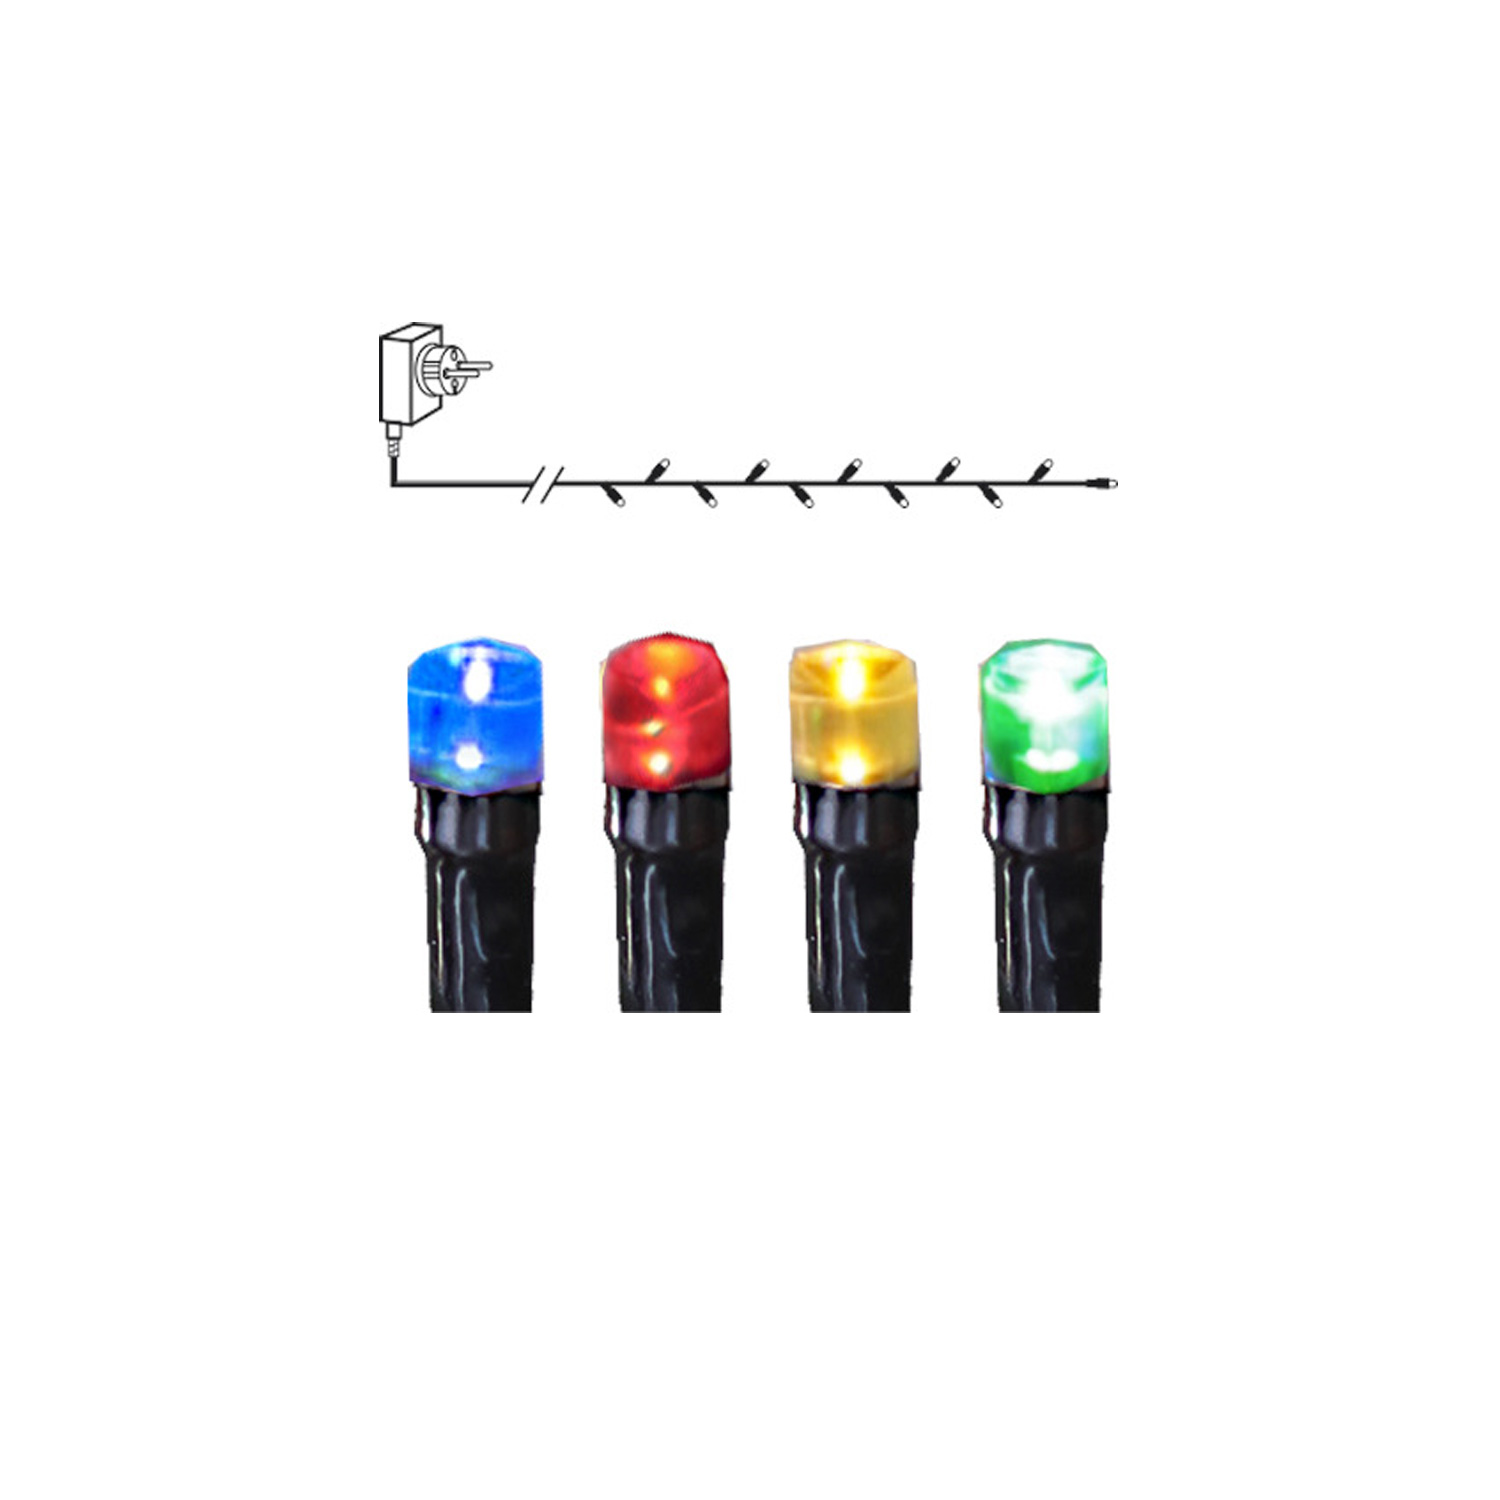 LED Lichterkette - Serie LED - Outdoor - 8m schwarzes Kabel - 80 bunte LED